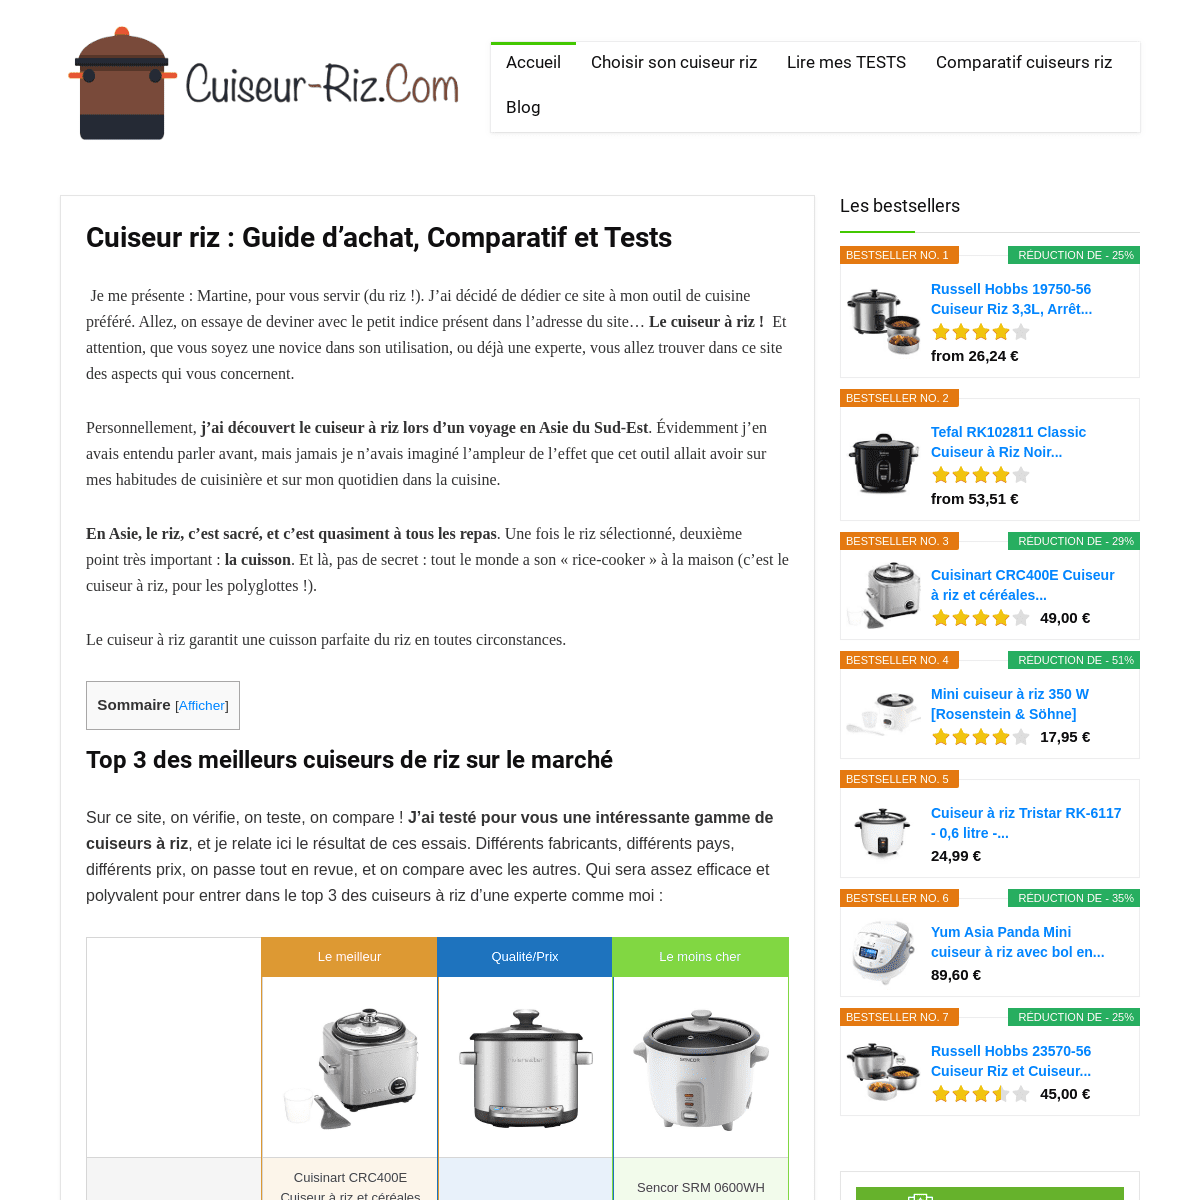 A complete backup of cuiseur-riz.com